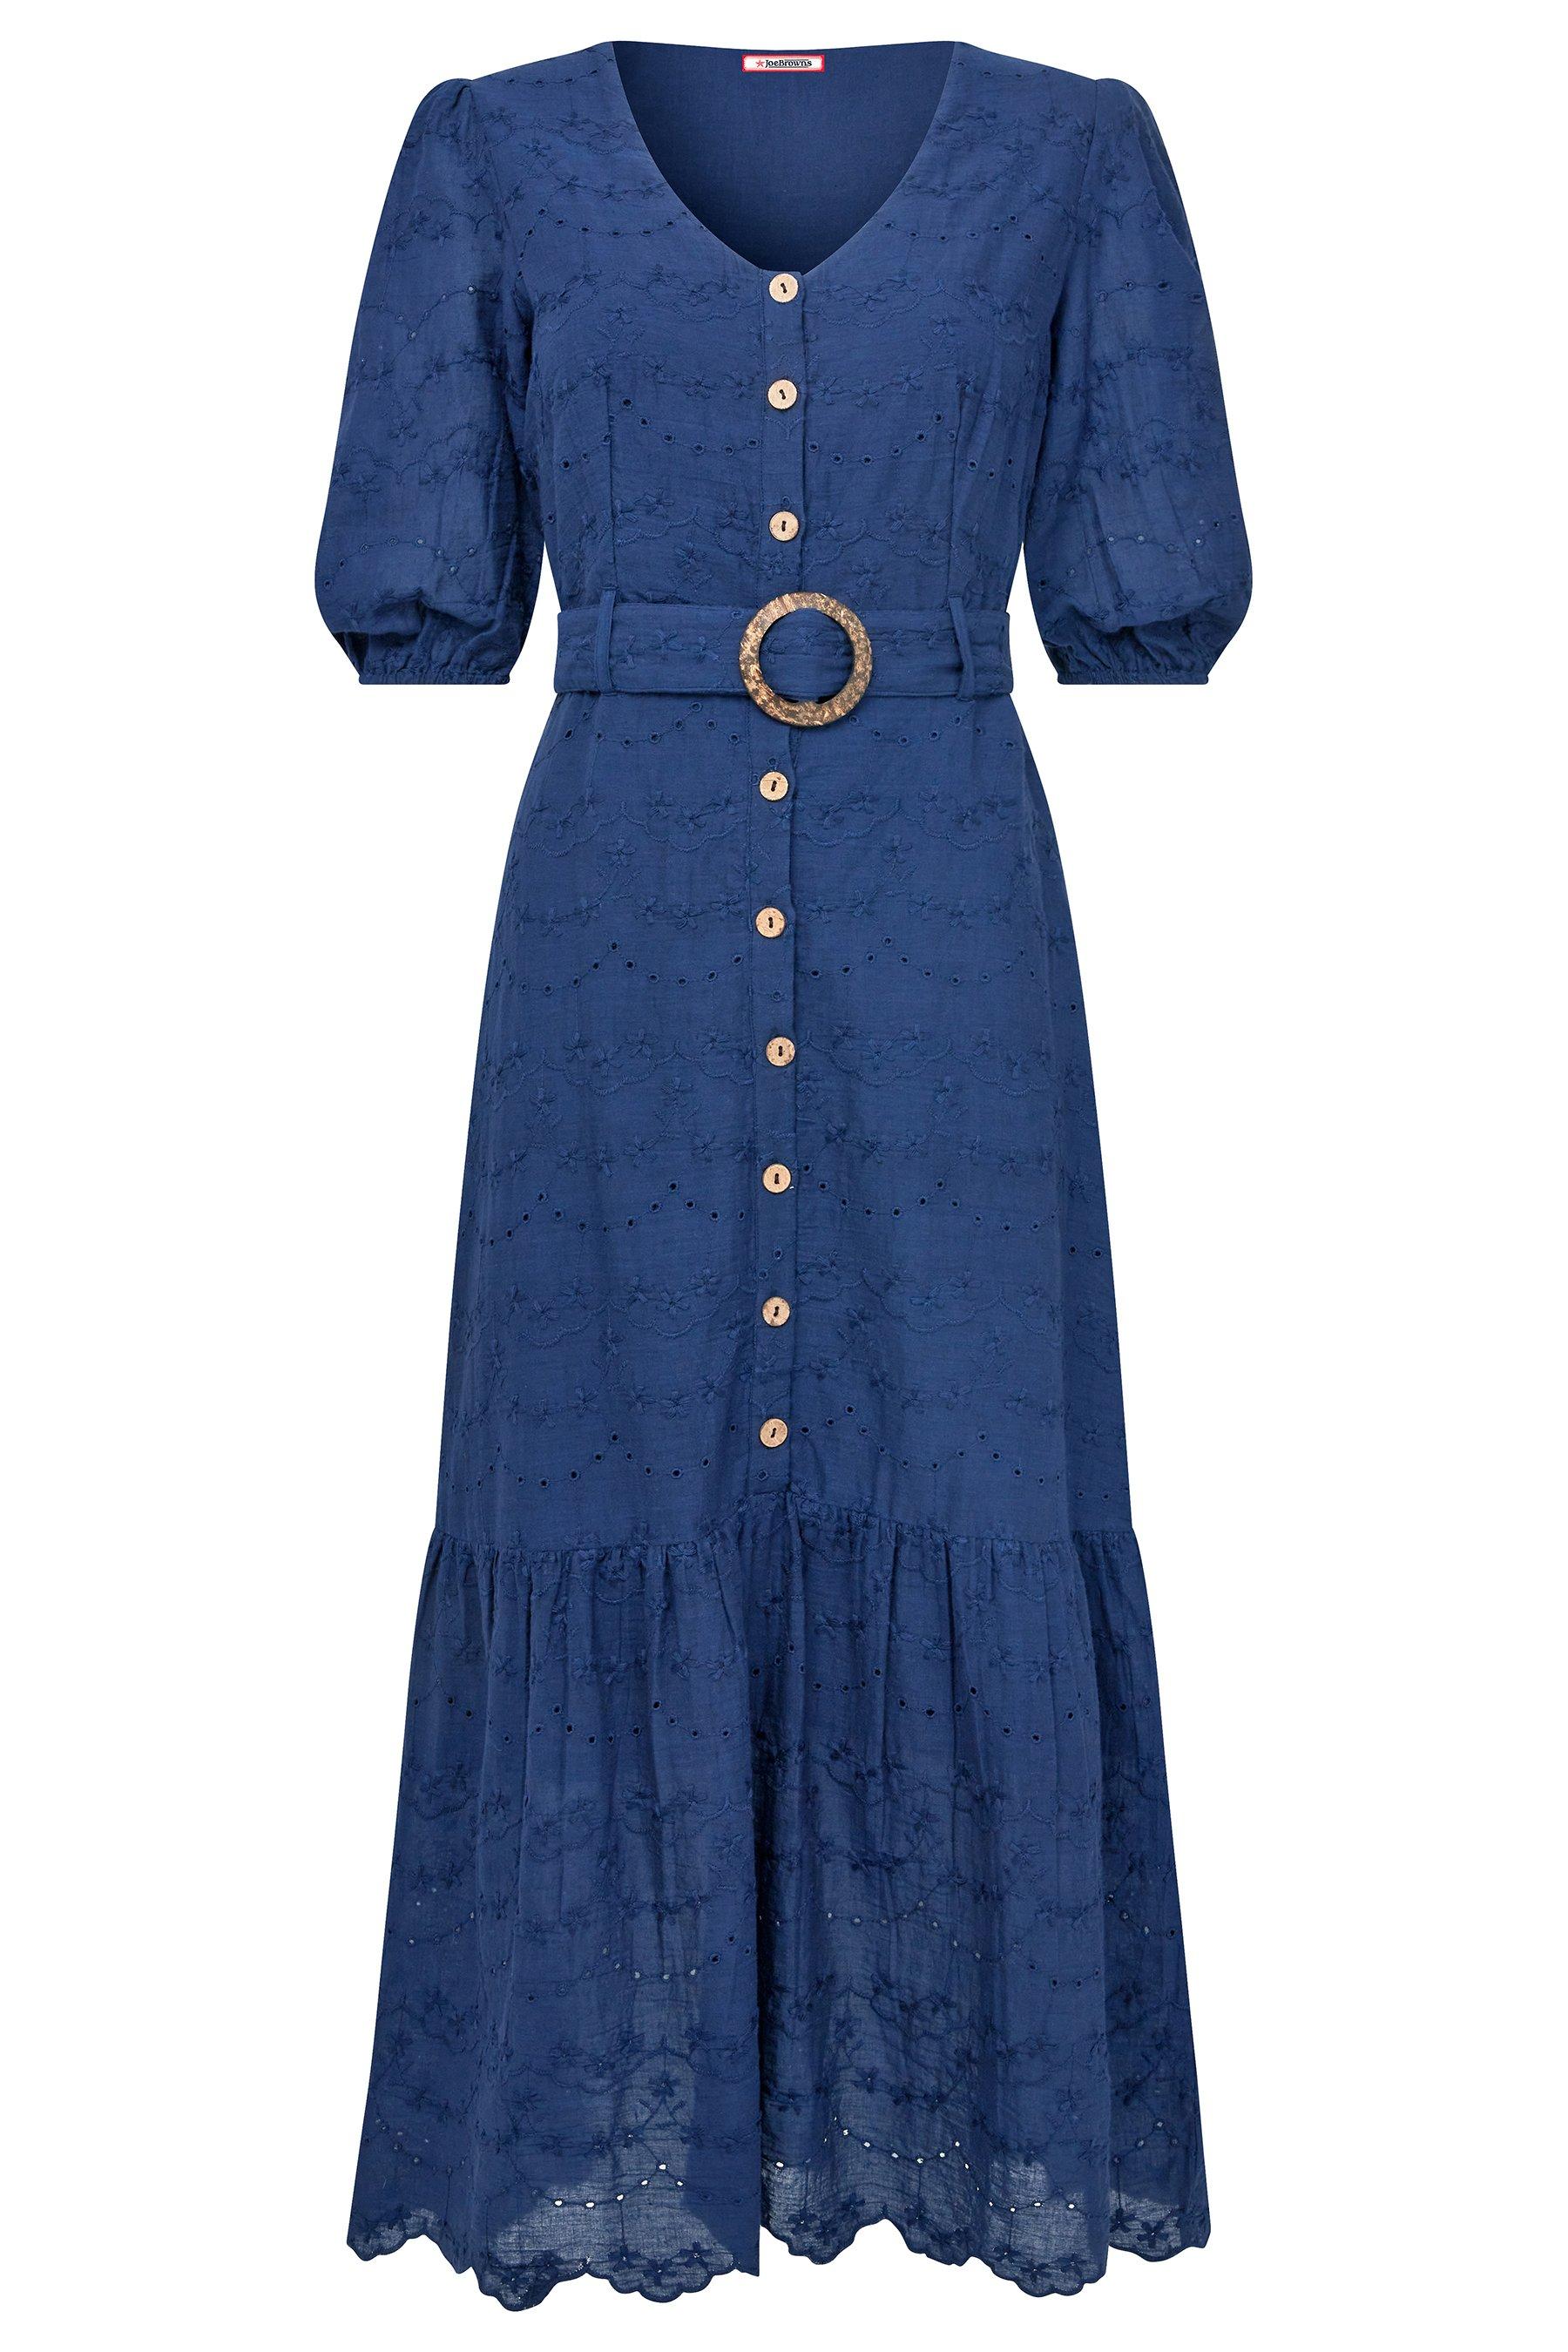 Joe Browns Women's Kellie Dress (Recycled Denim) Casual, Blue, 8 :  Amazon.co.uk: Fashion